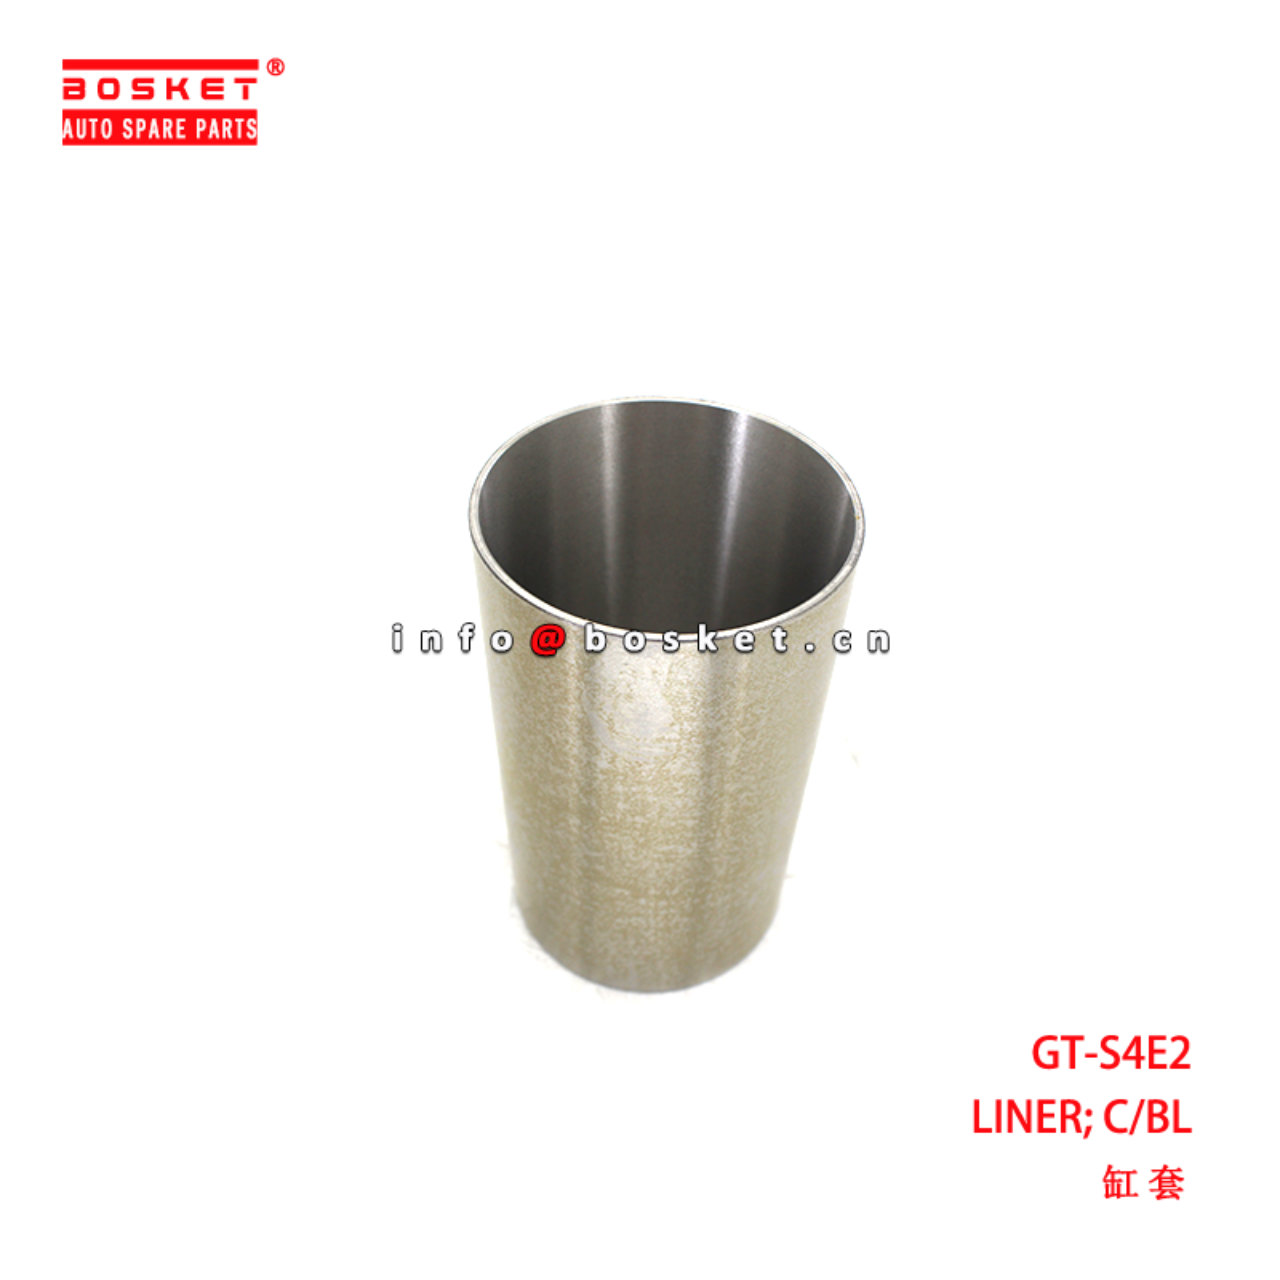 GT-S4E2 Cylinder Block Liner suitable for ISUZU  S4E2 GT-S4E2